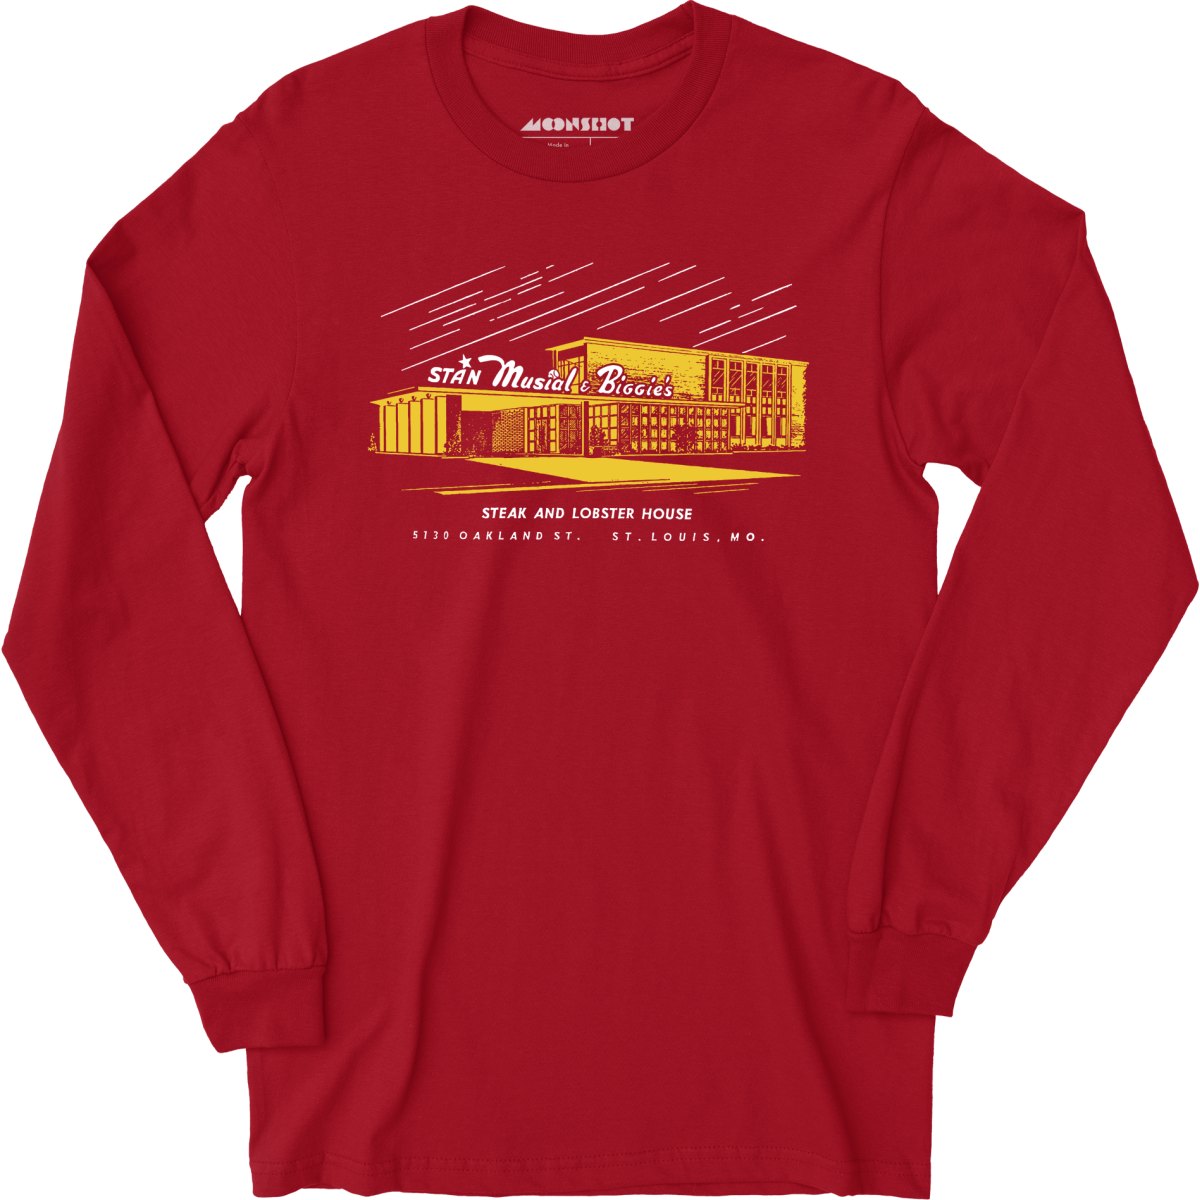 Stan Musial & Biggie's - St. Louis, MO - Vintage Restaurant - - Long Sleeve  T-Shirt